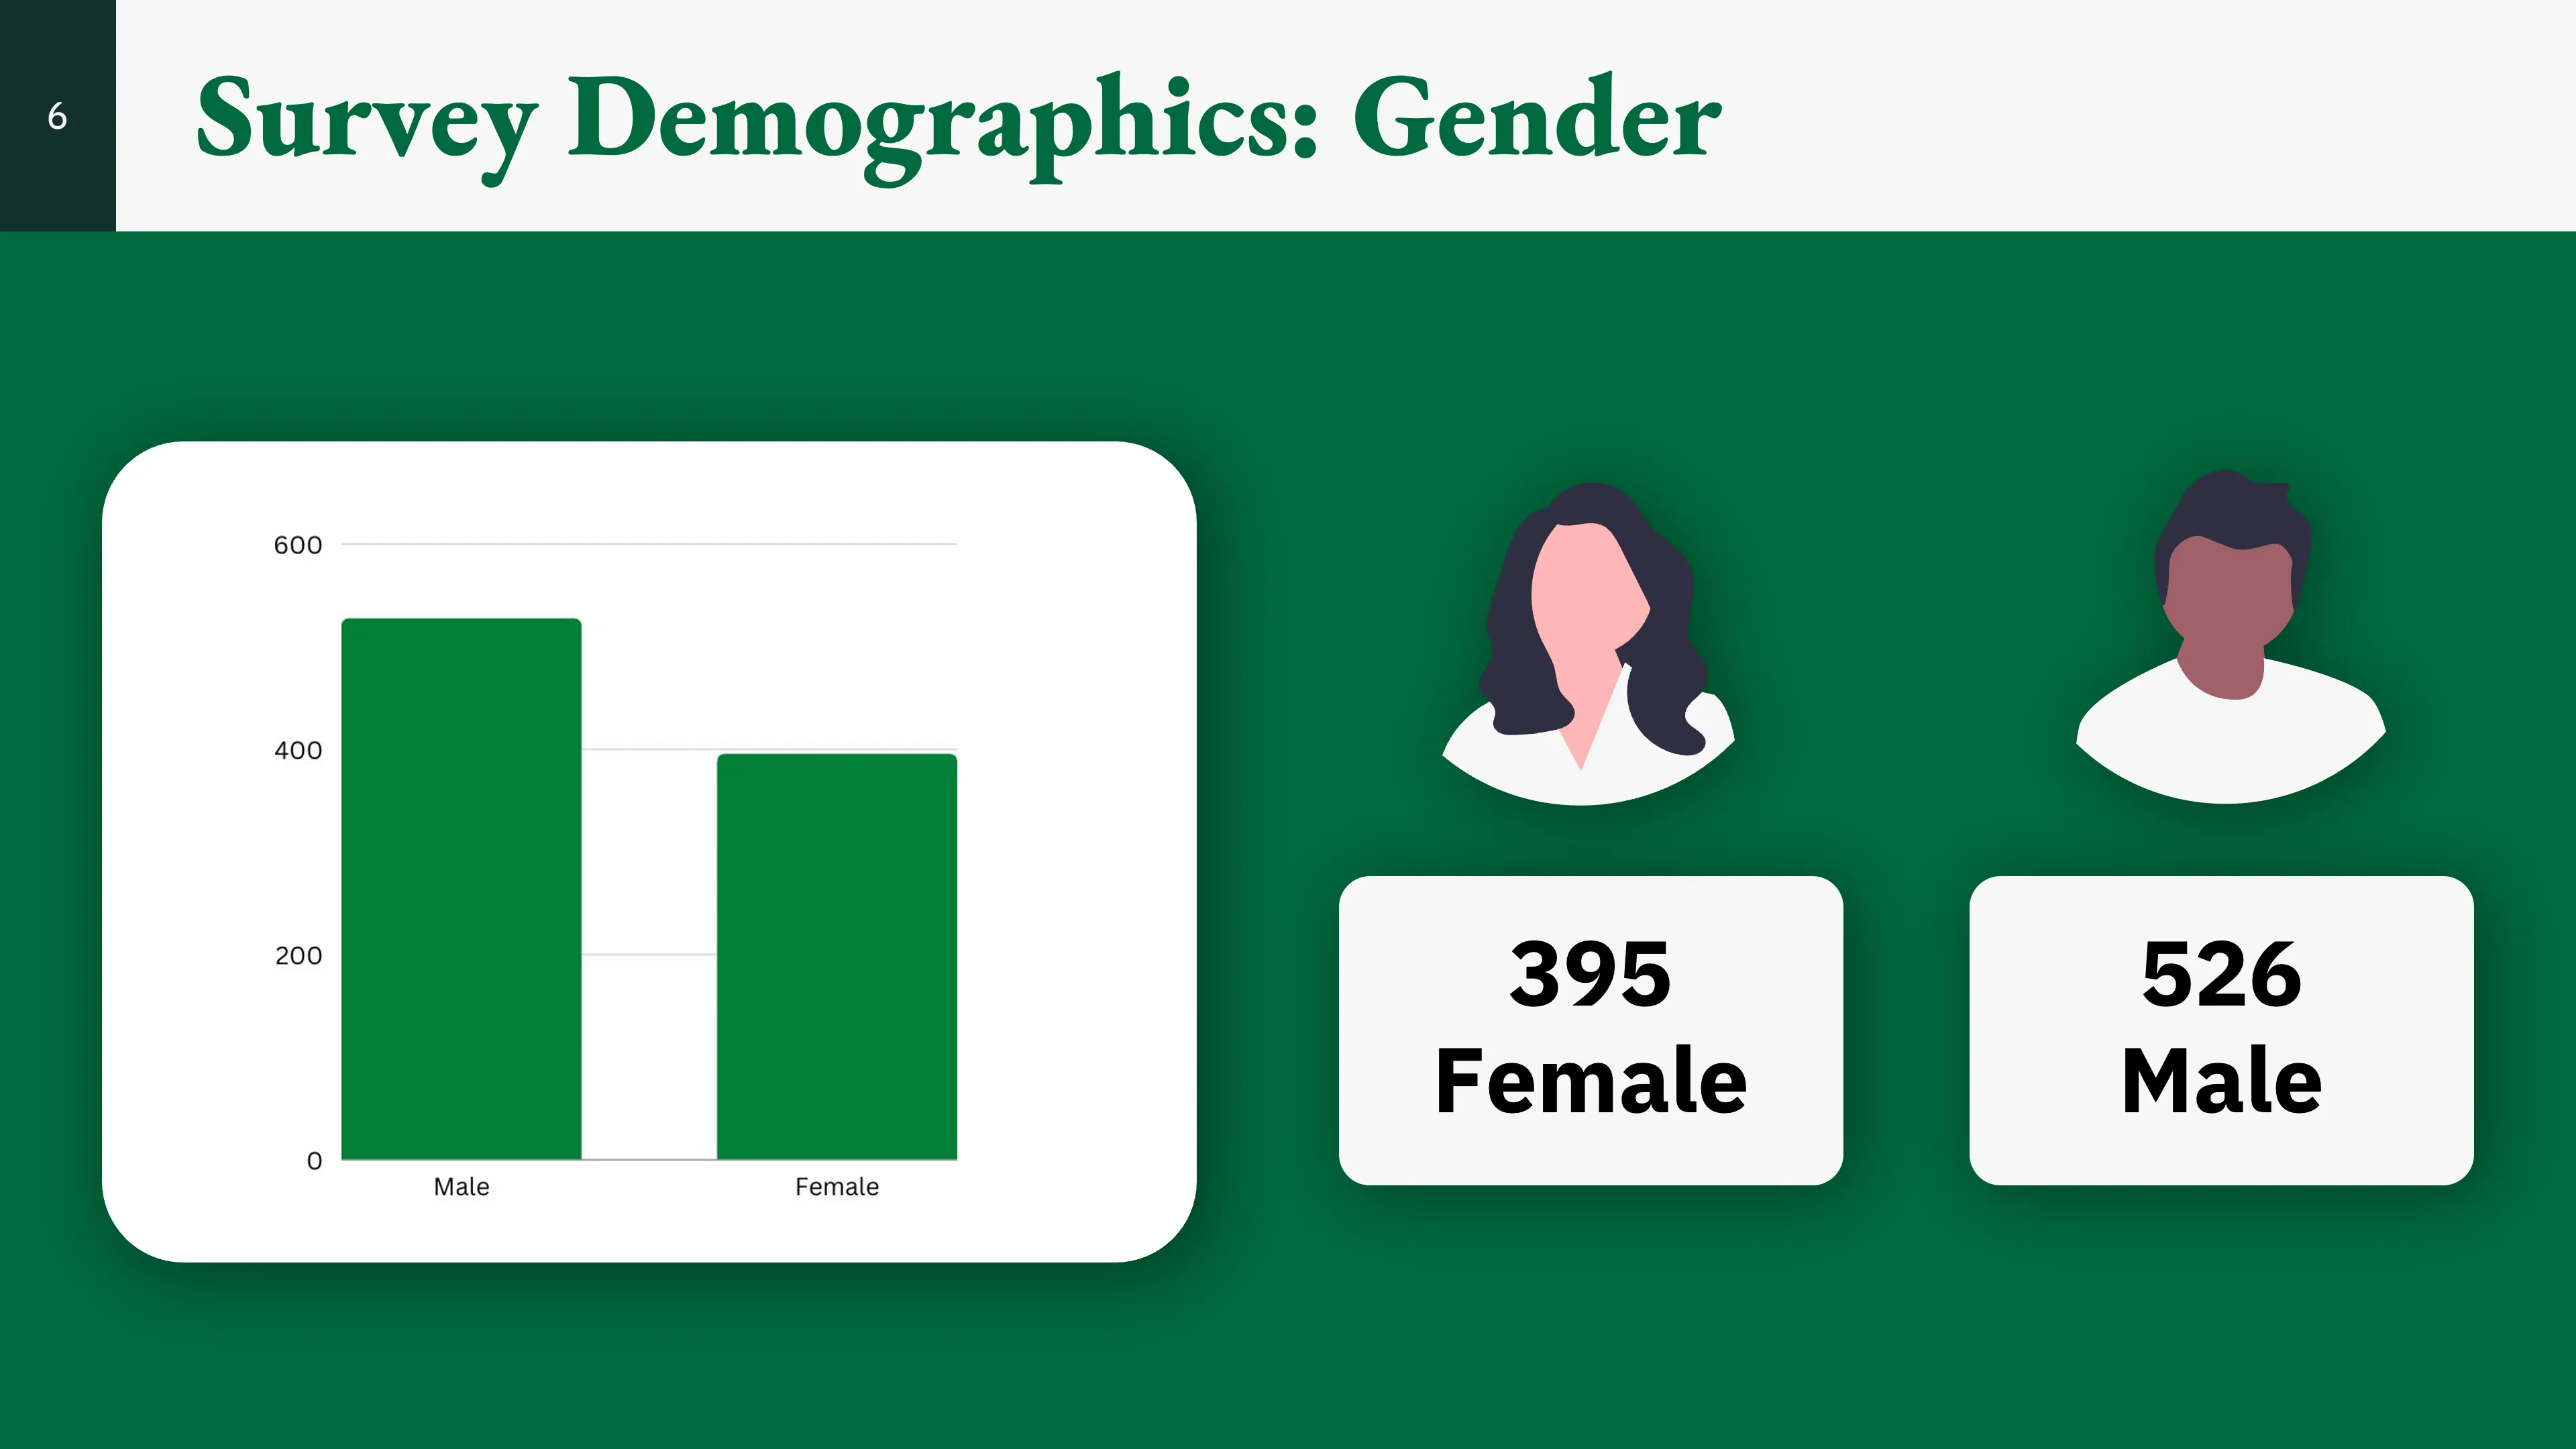 Slide 6, showing the breakdown of responsdents' gender.